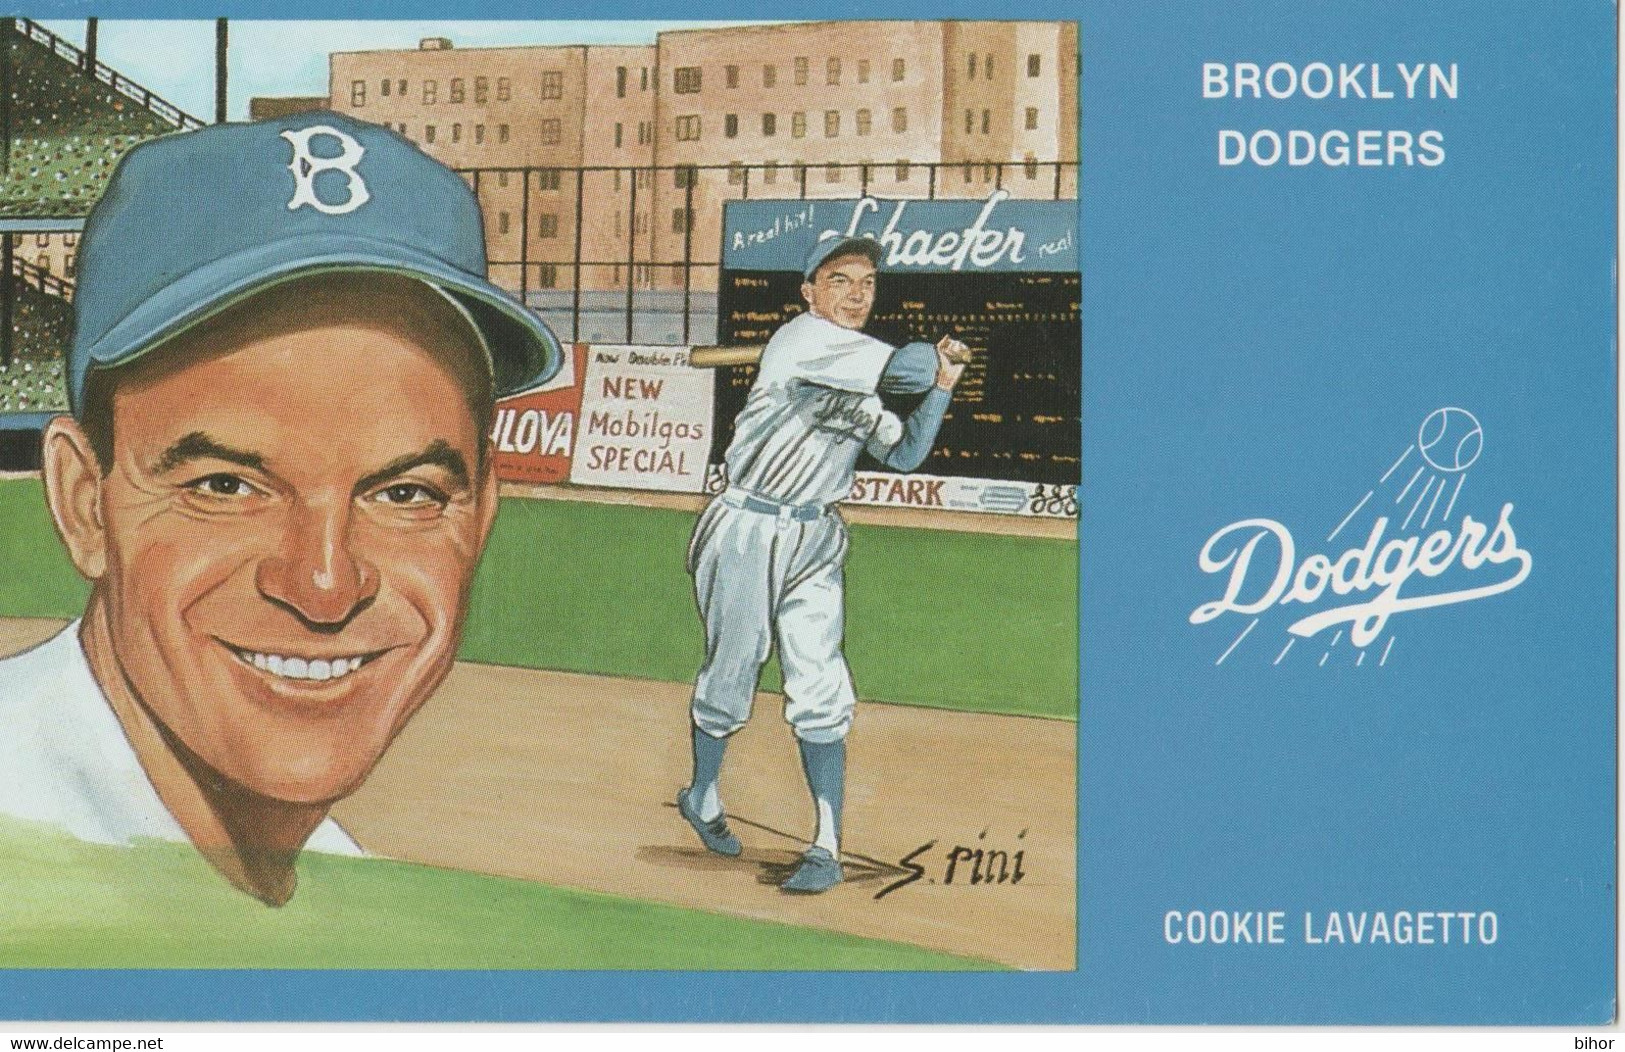 Cookie Lavagetto / Baseball - Brooklyn Dodgers / Illustrateur Susan Rini - Baseball